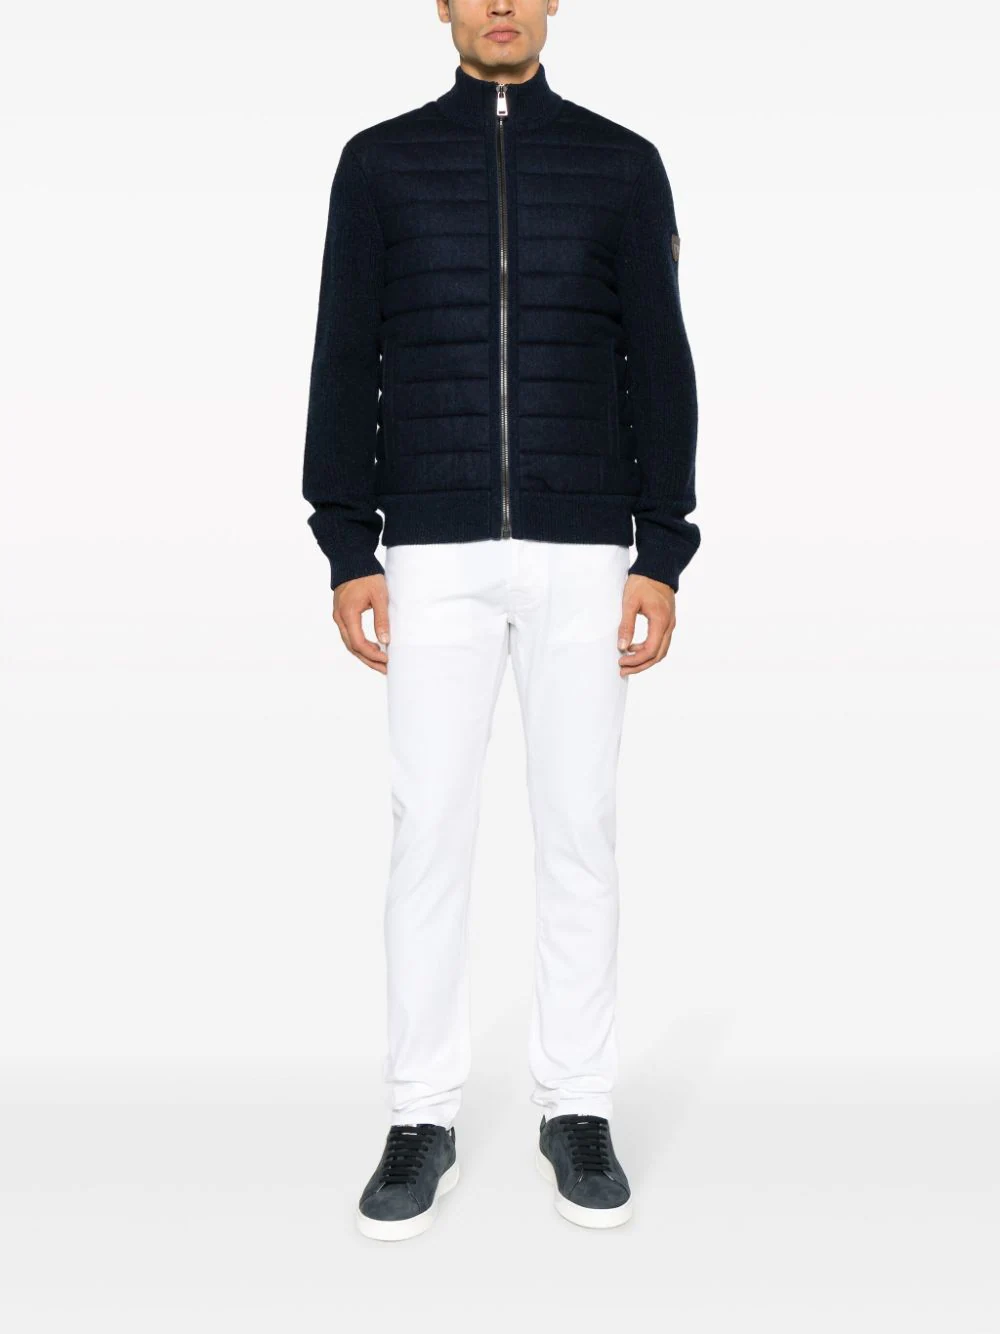 Wool-Cashmere Hybrid Full-Zip Sweater